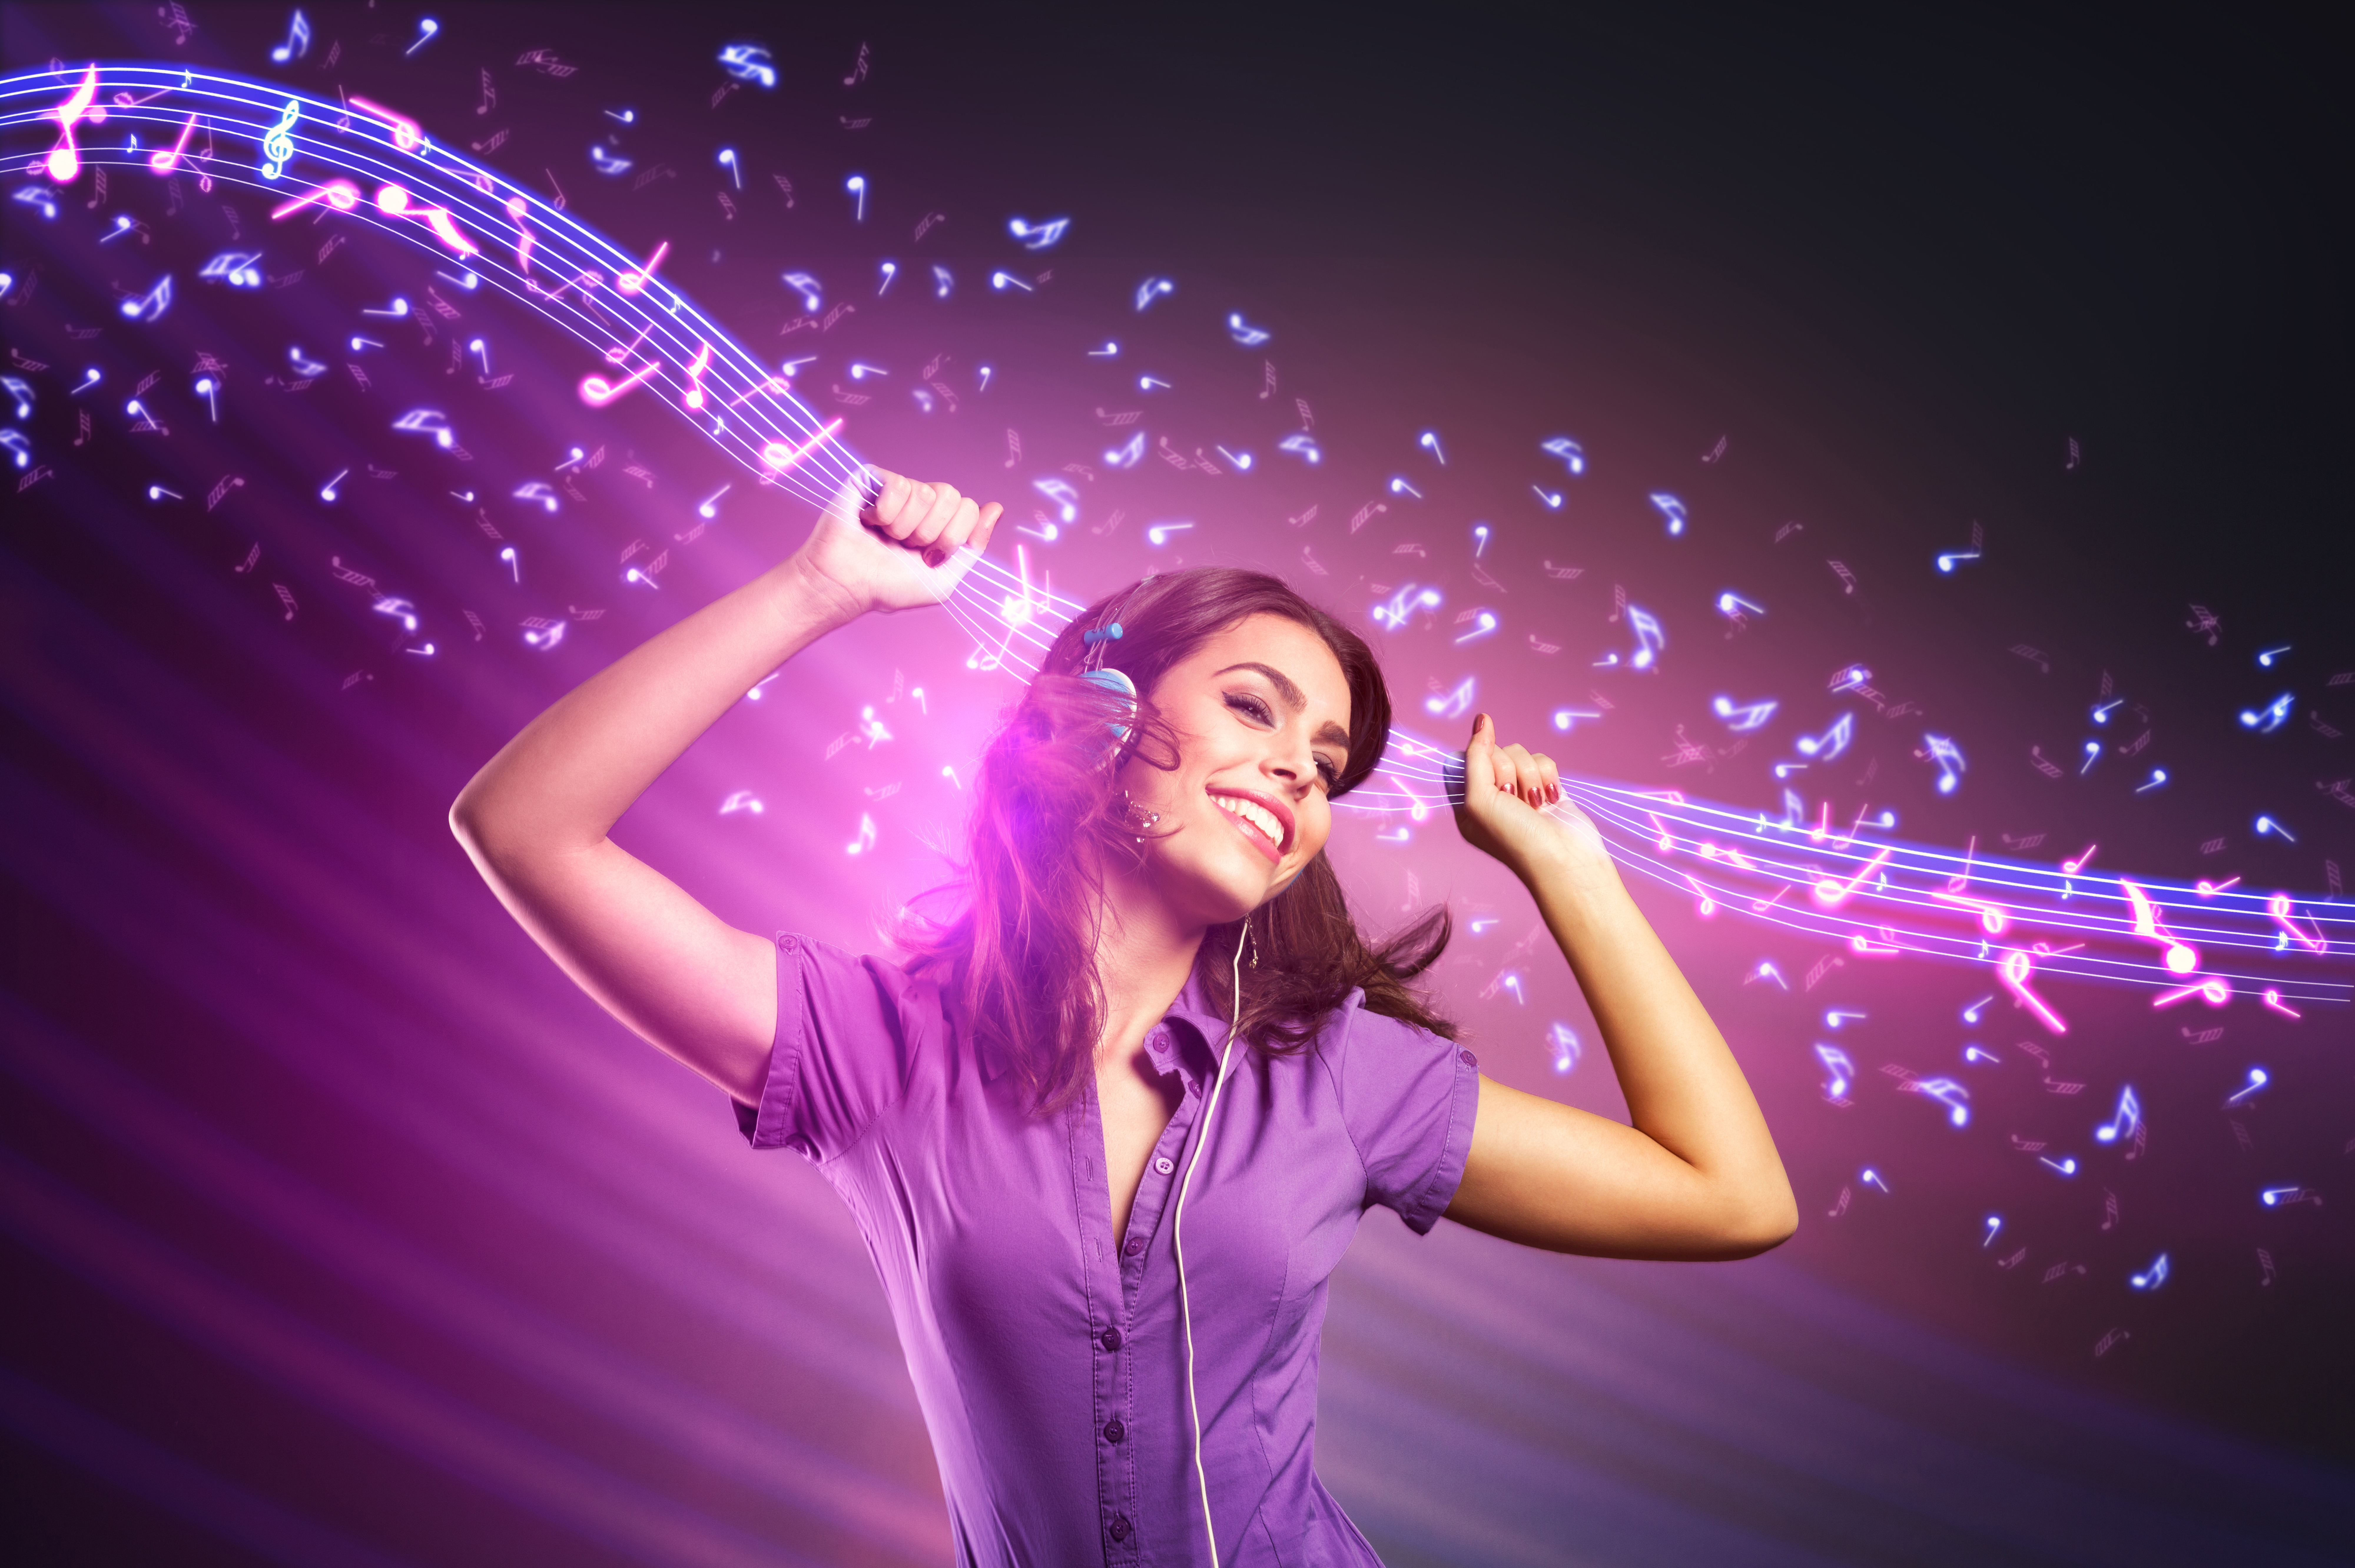 Image: Girl, headphones, music, smile, mood, purple background